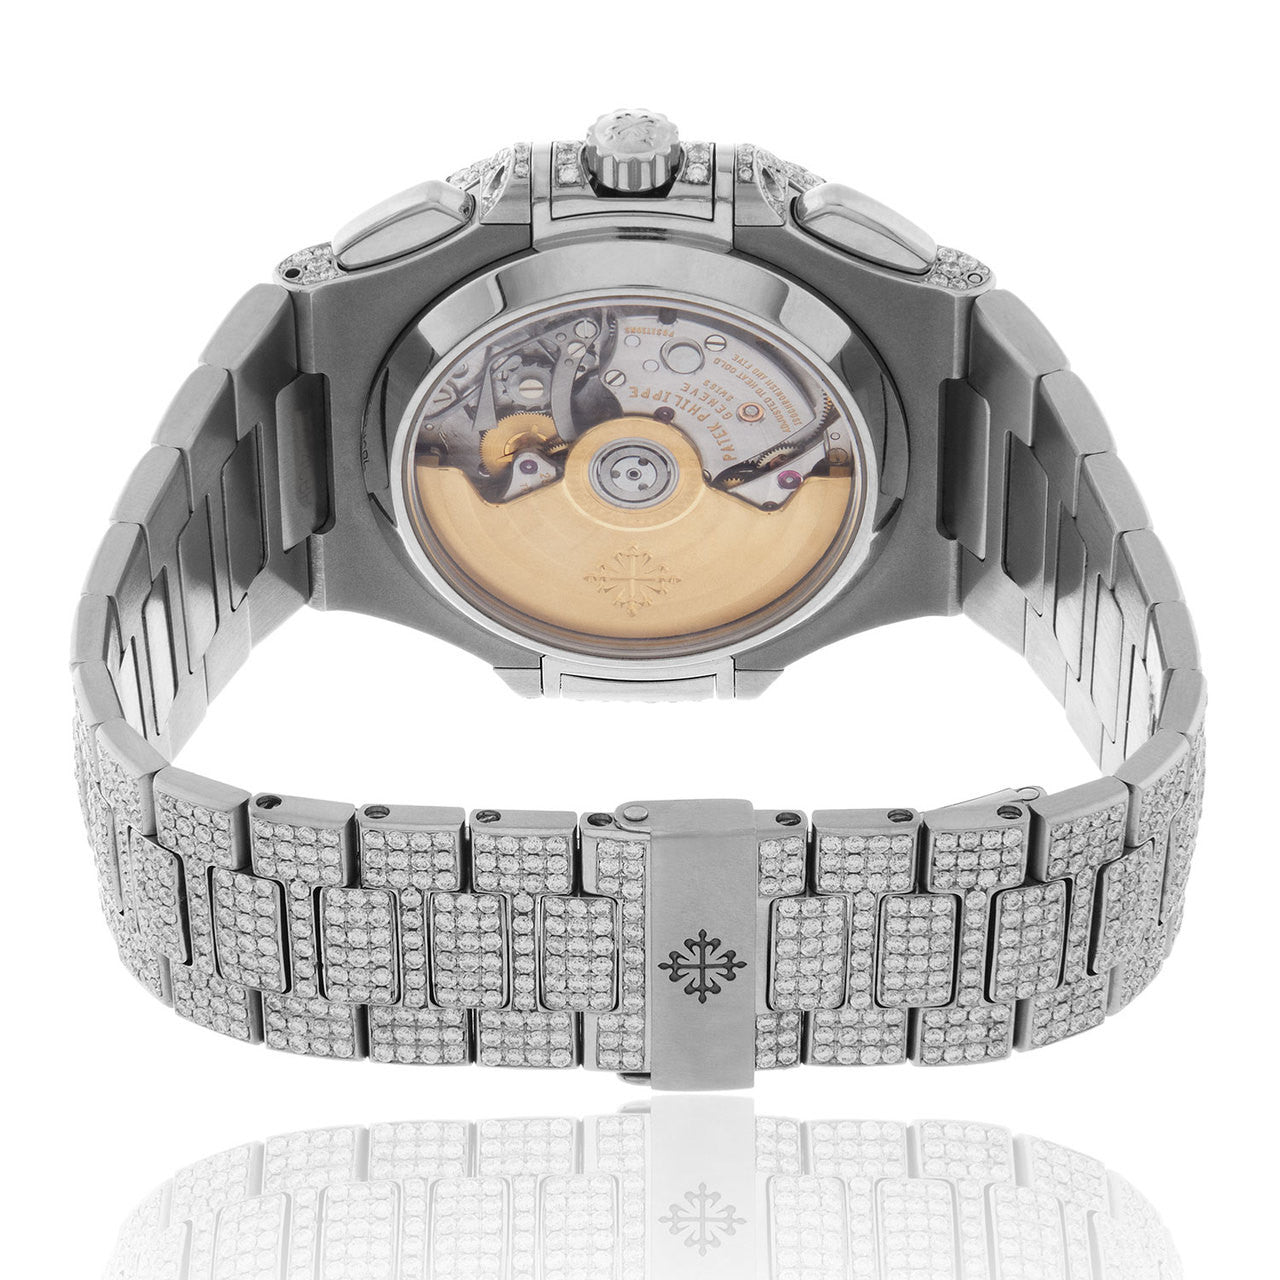 Patek Philippe Nautilus 5980 27.8ct Diamond Men's Watch